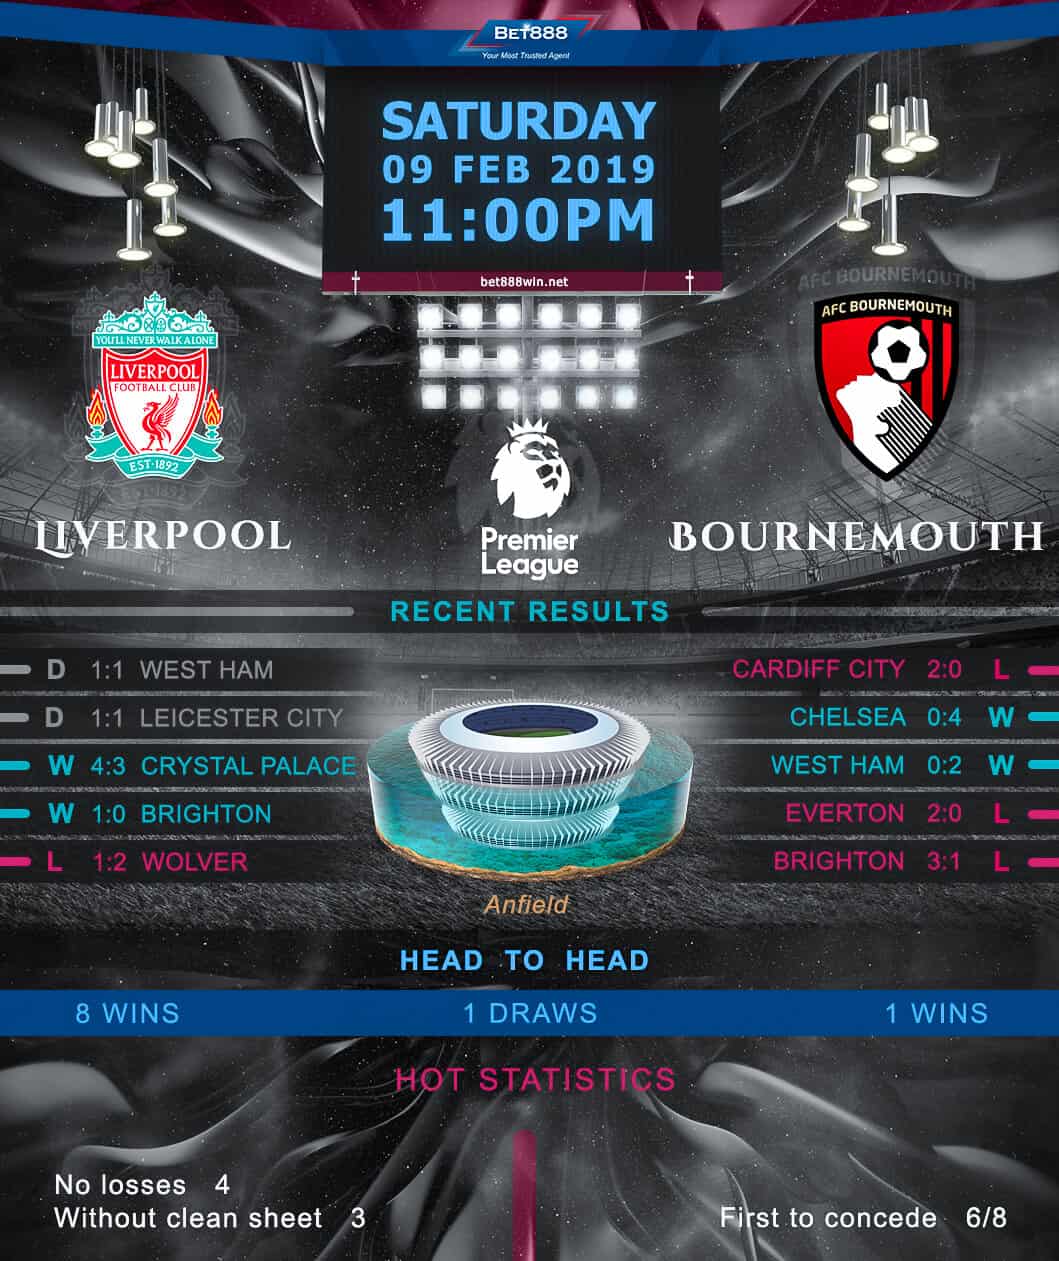 Liverpool vs Bournemouth 09/02/19